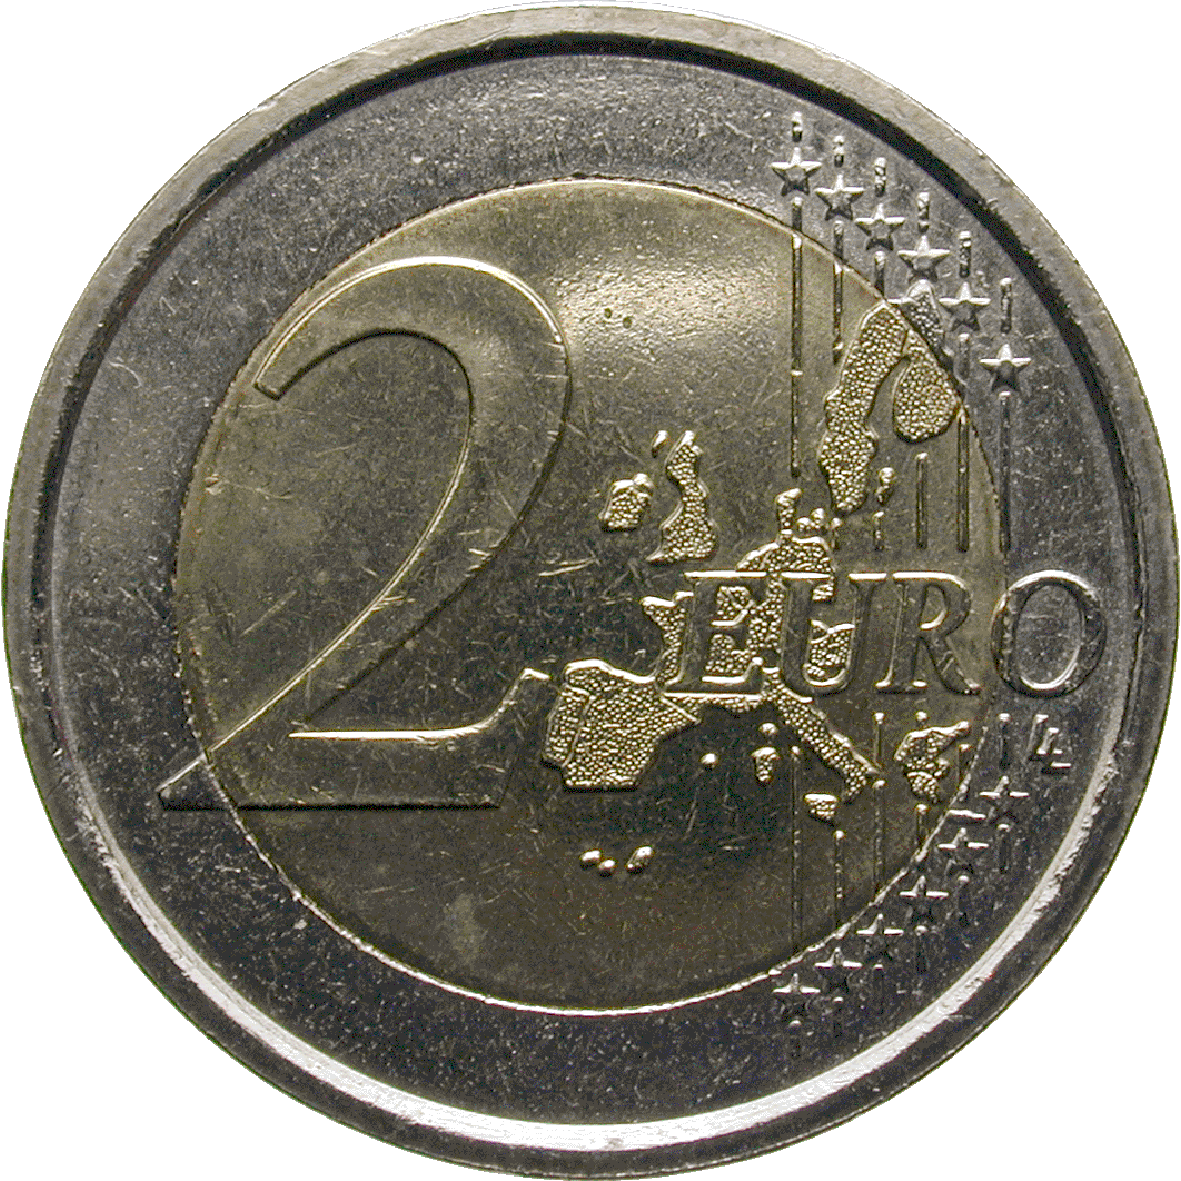 Republic of San Marino, 2 Euro 2007 (obverse)